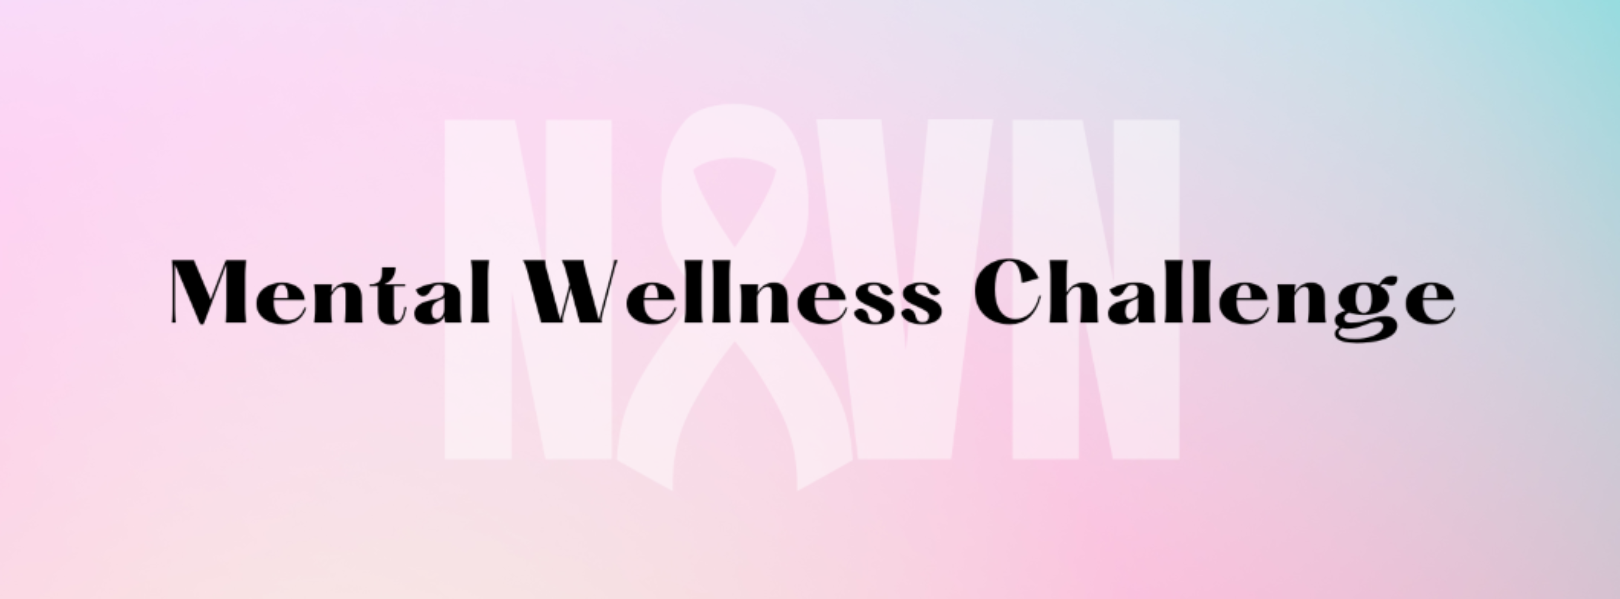 NAVN Mental Wellness Challenge